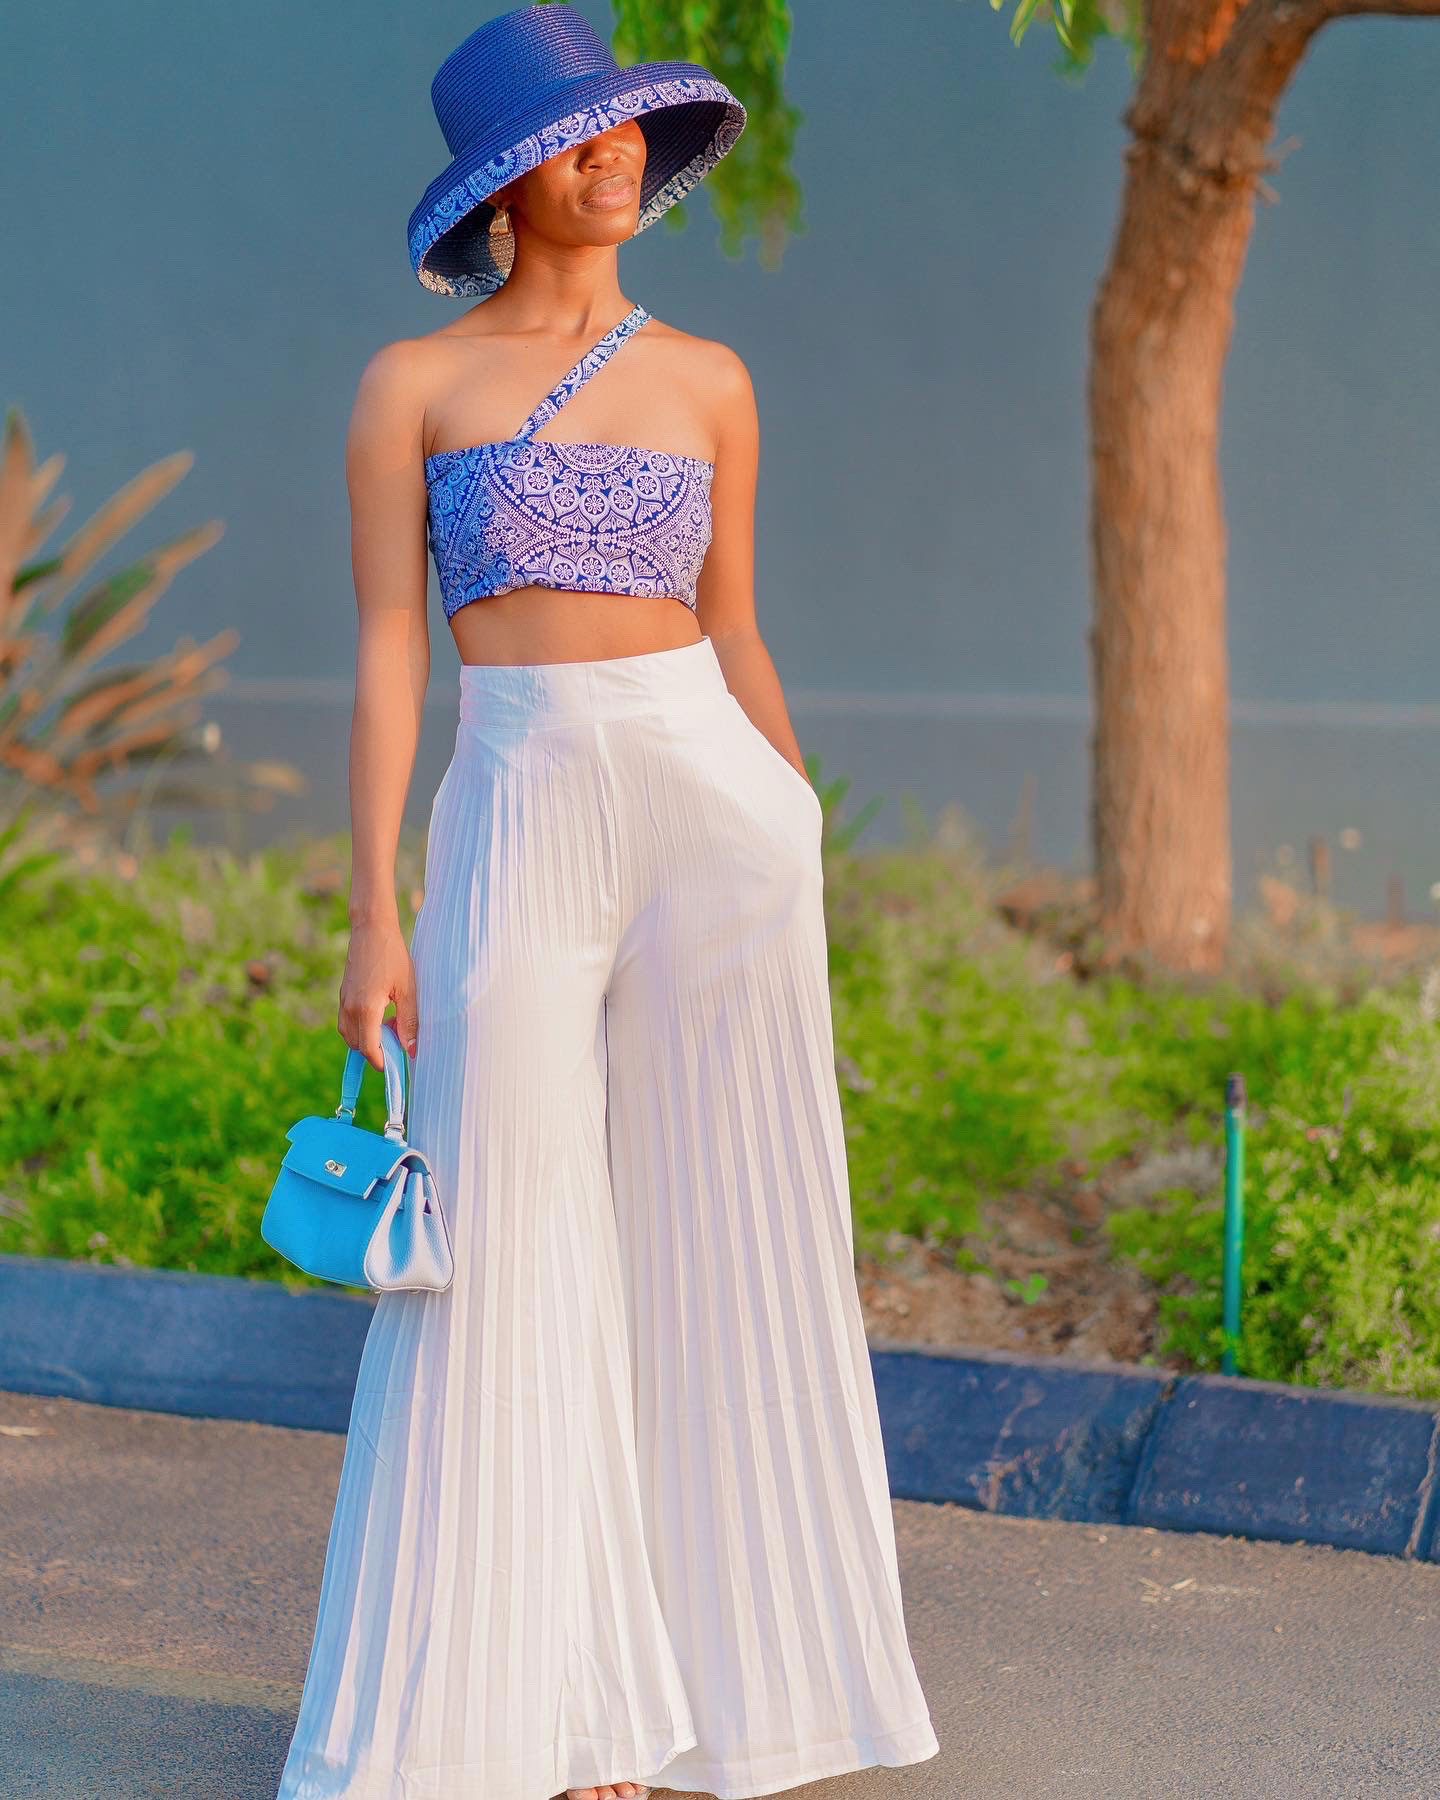 Best dressed of the week : Mpho “Gigi” Tshwaane » TheVoiceBW